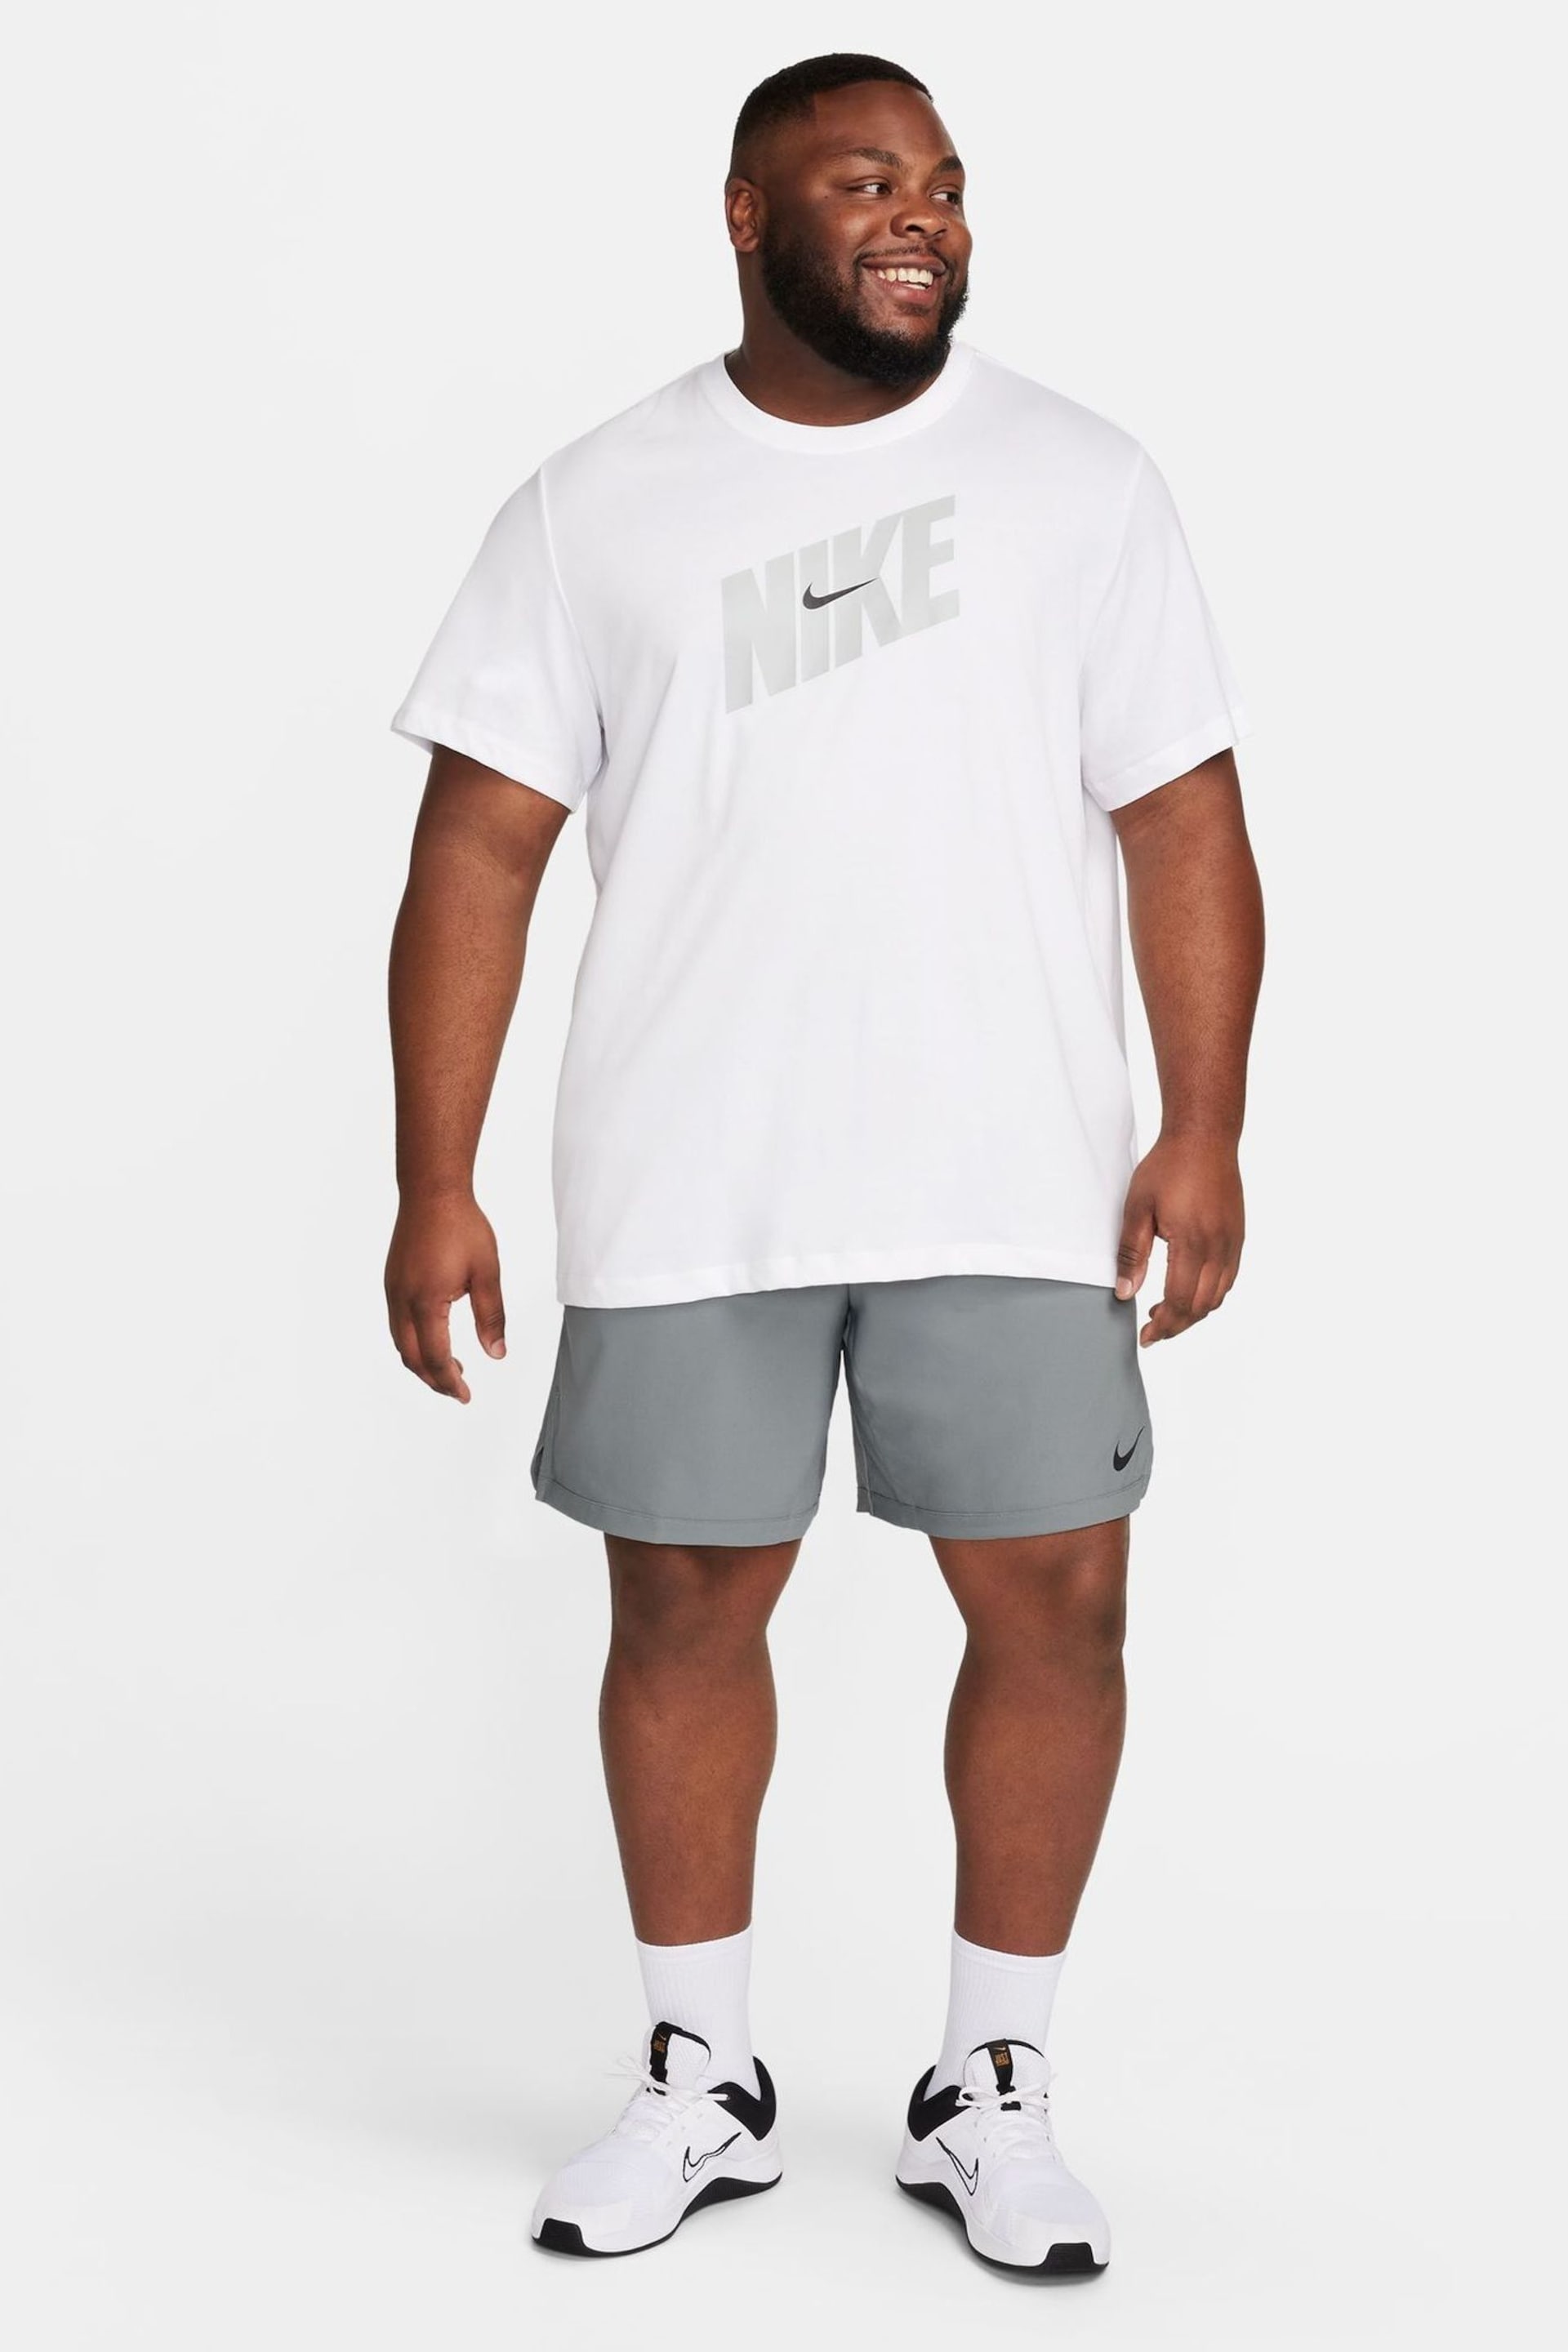 Nike White Dri-FIT Training T-Shirt - Image 3 of 5